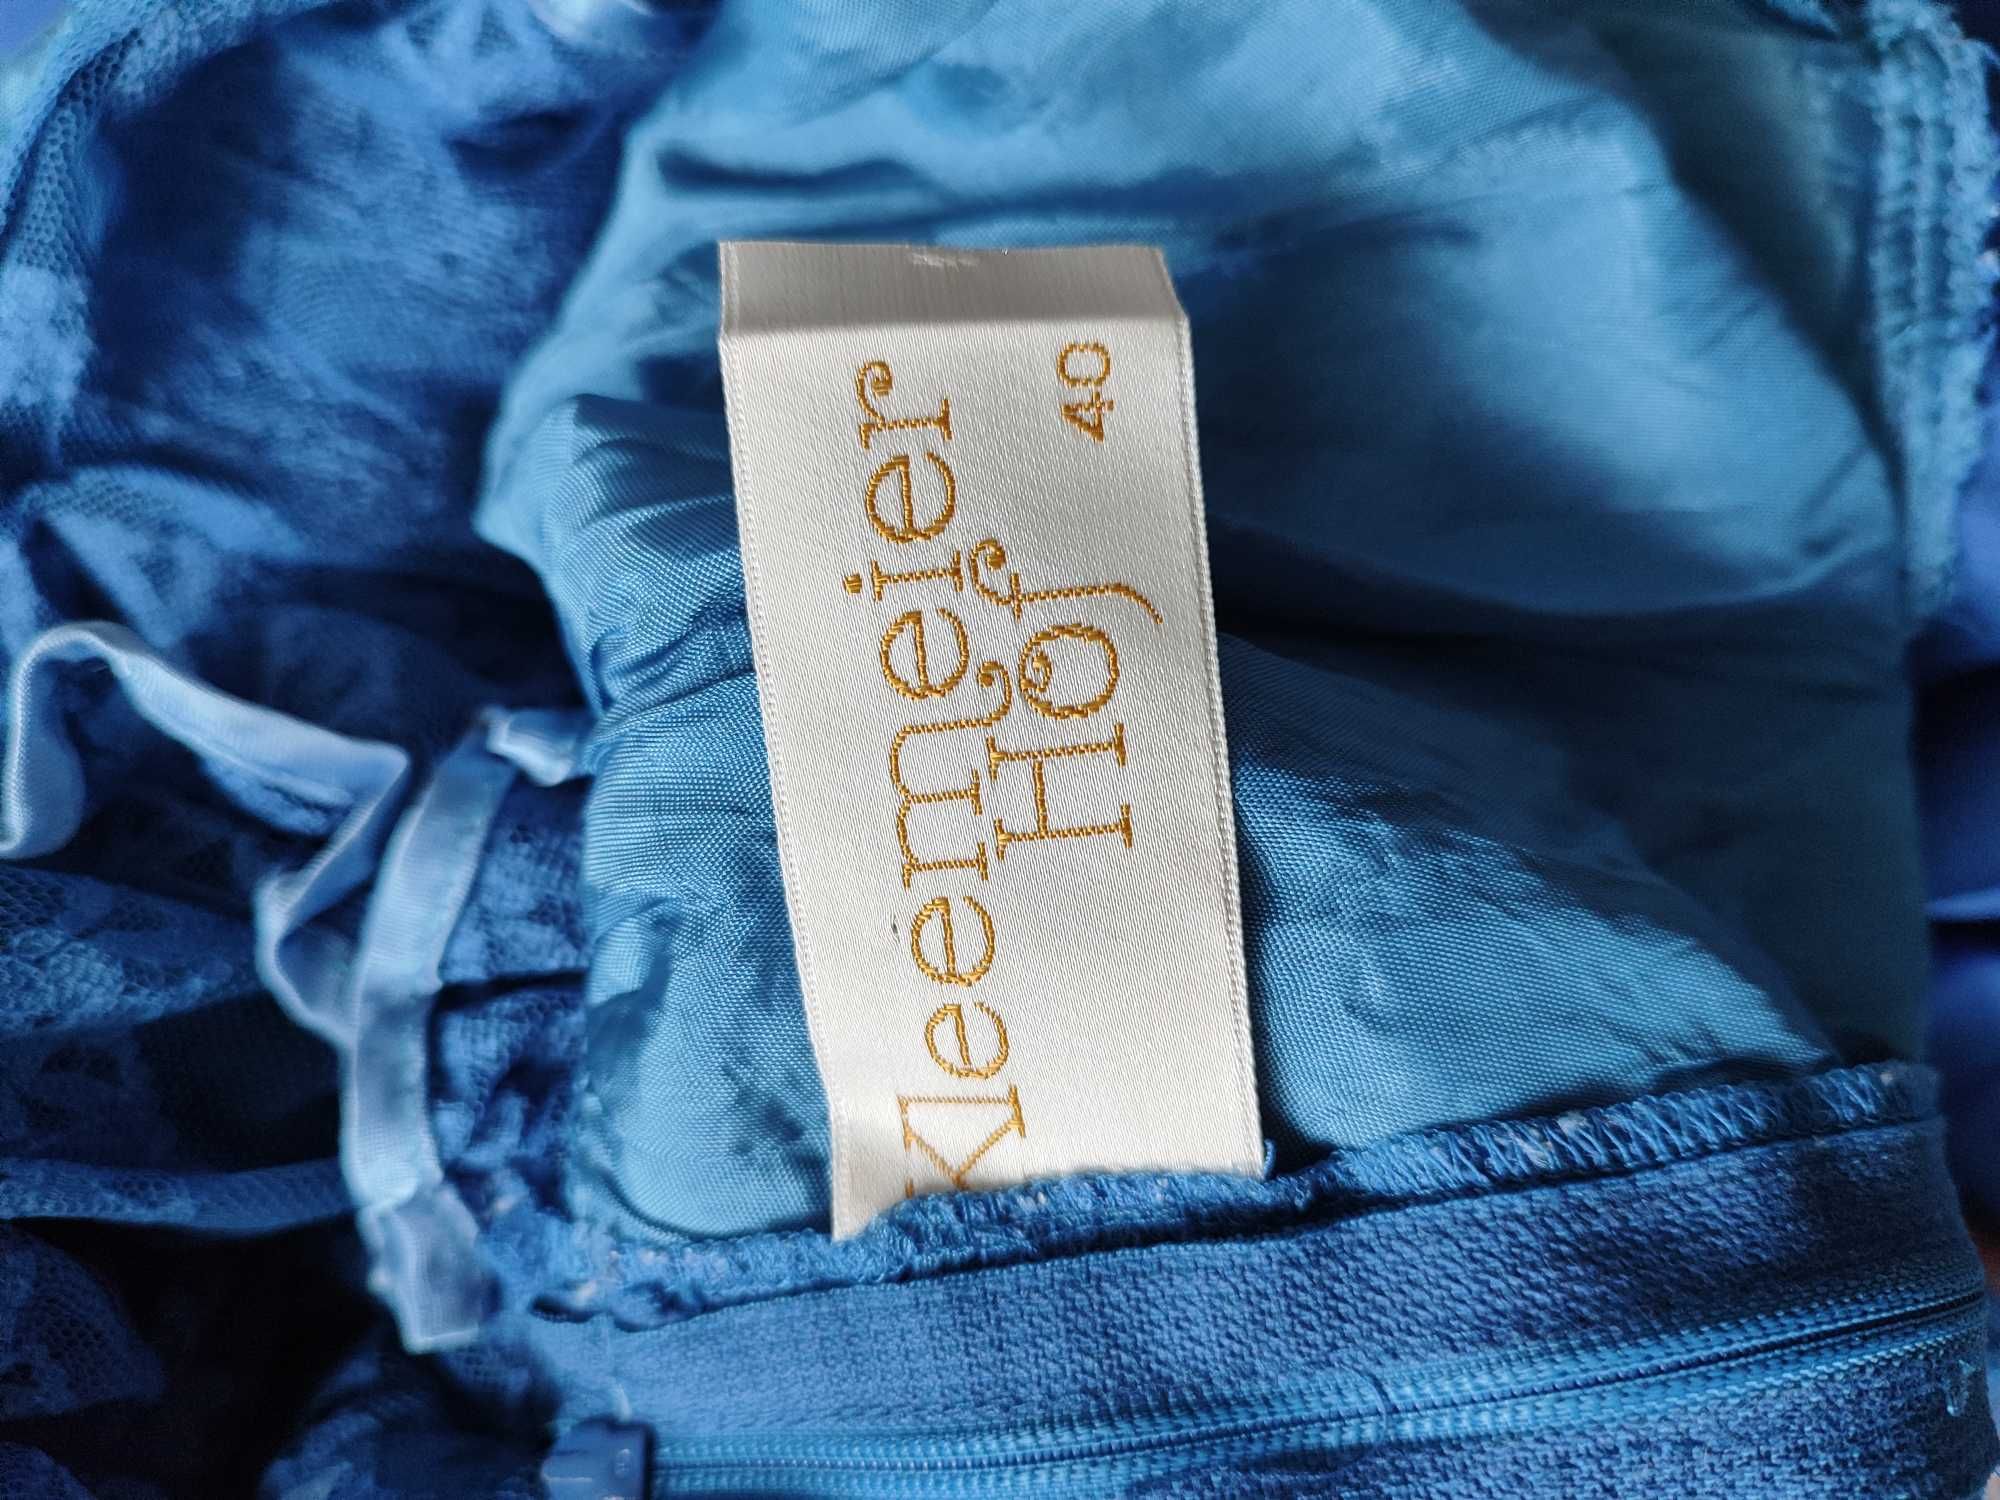 Kleemeier długa suknia kobaltowa chabrowa koronka boho r. 40 +gratis